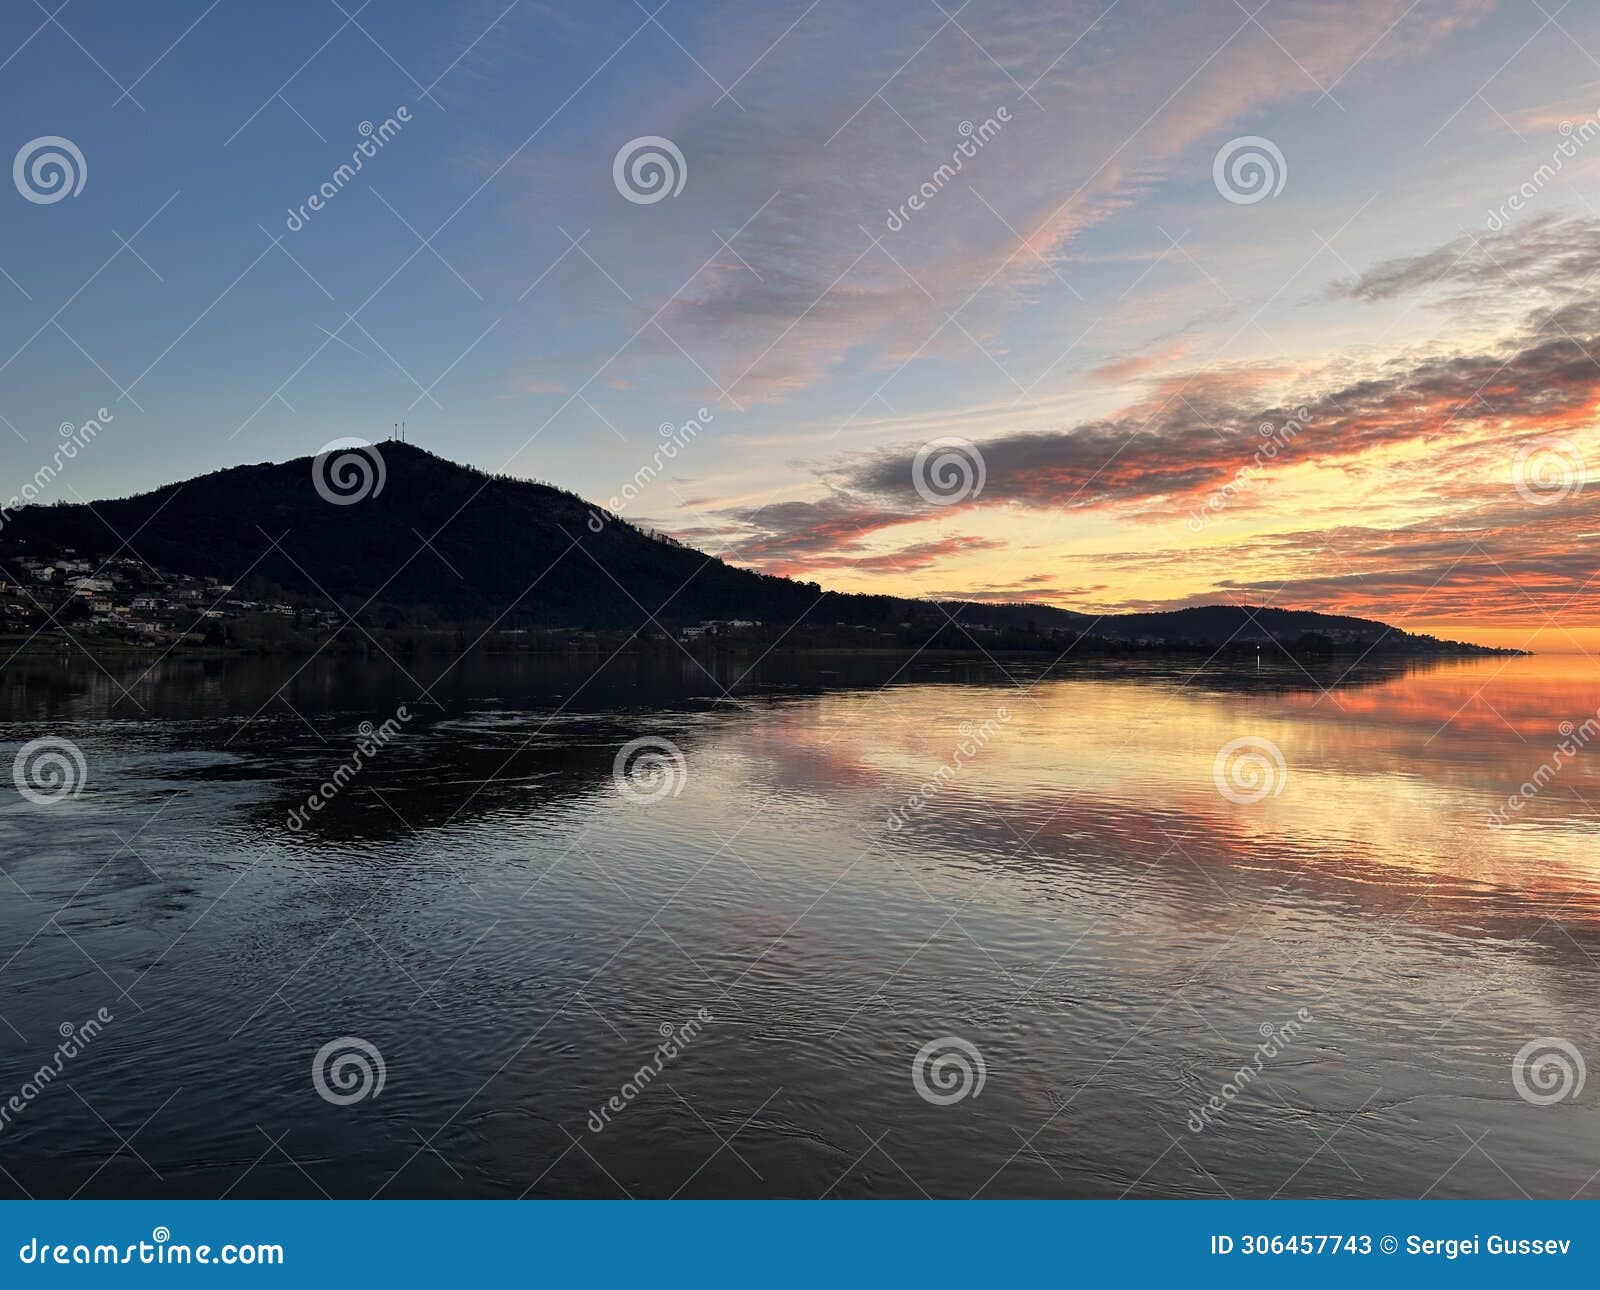 sunset over the river minho and the mountain near eiras, o rosal, galicia, spain, january 2023